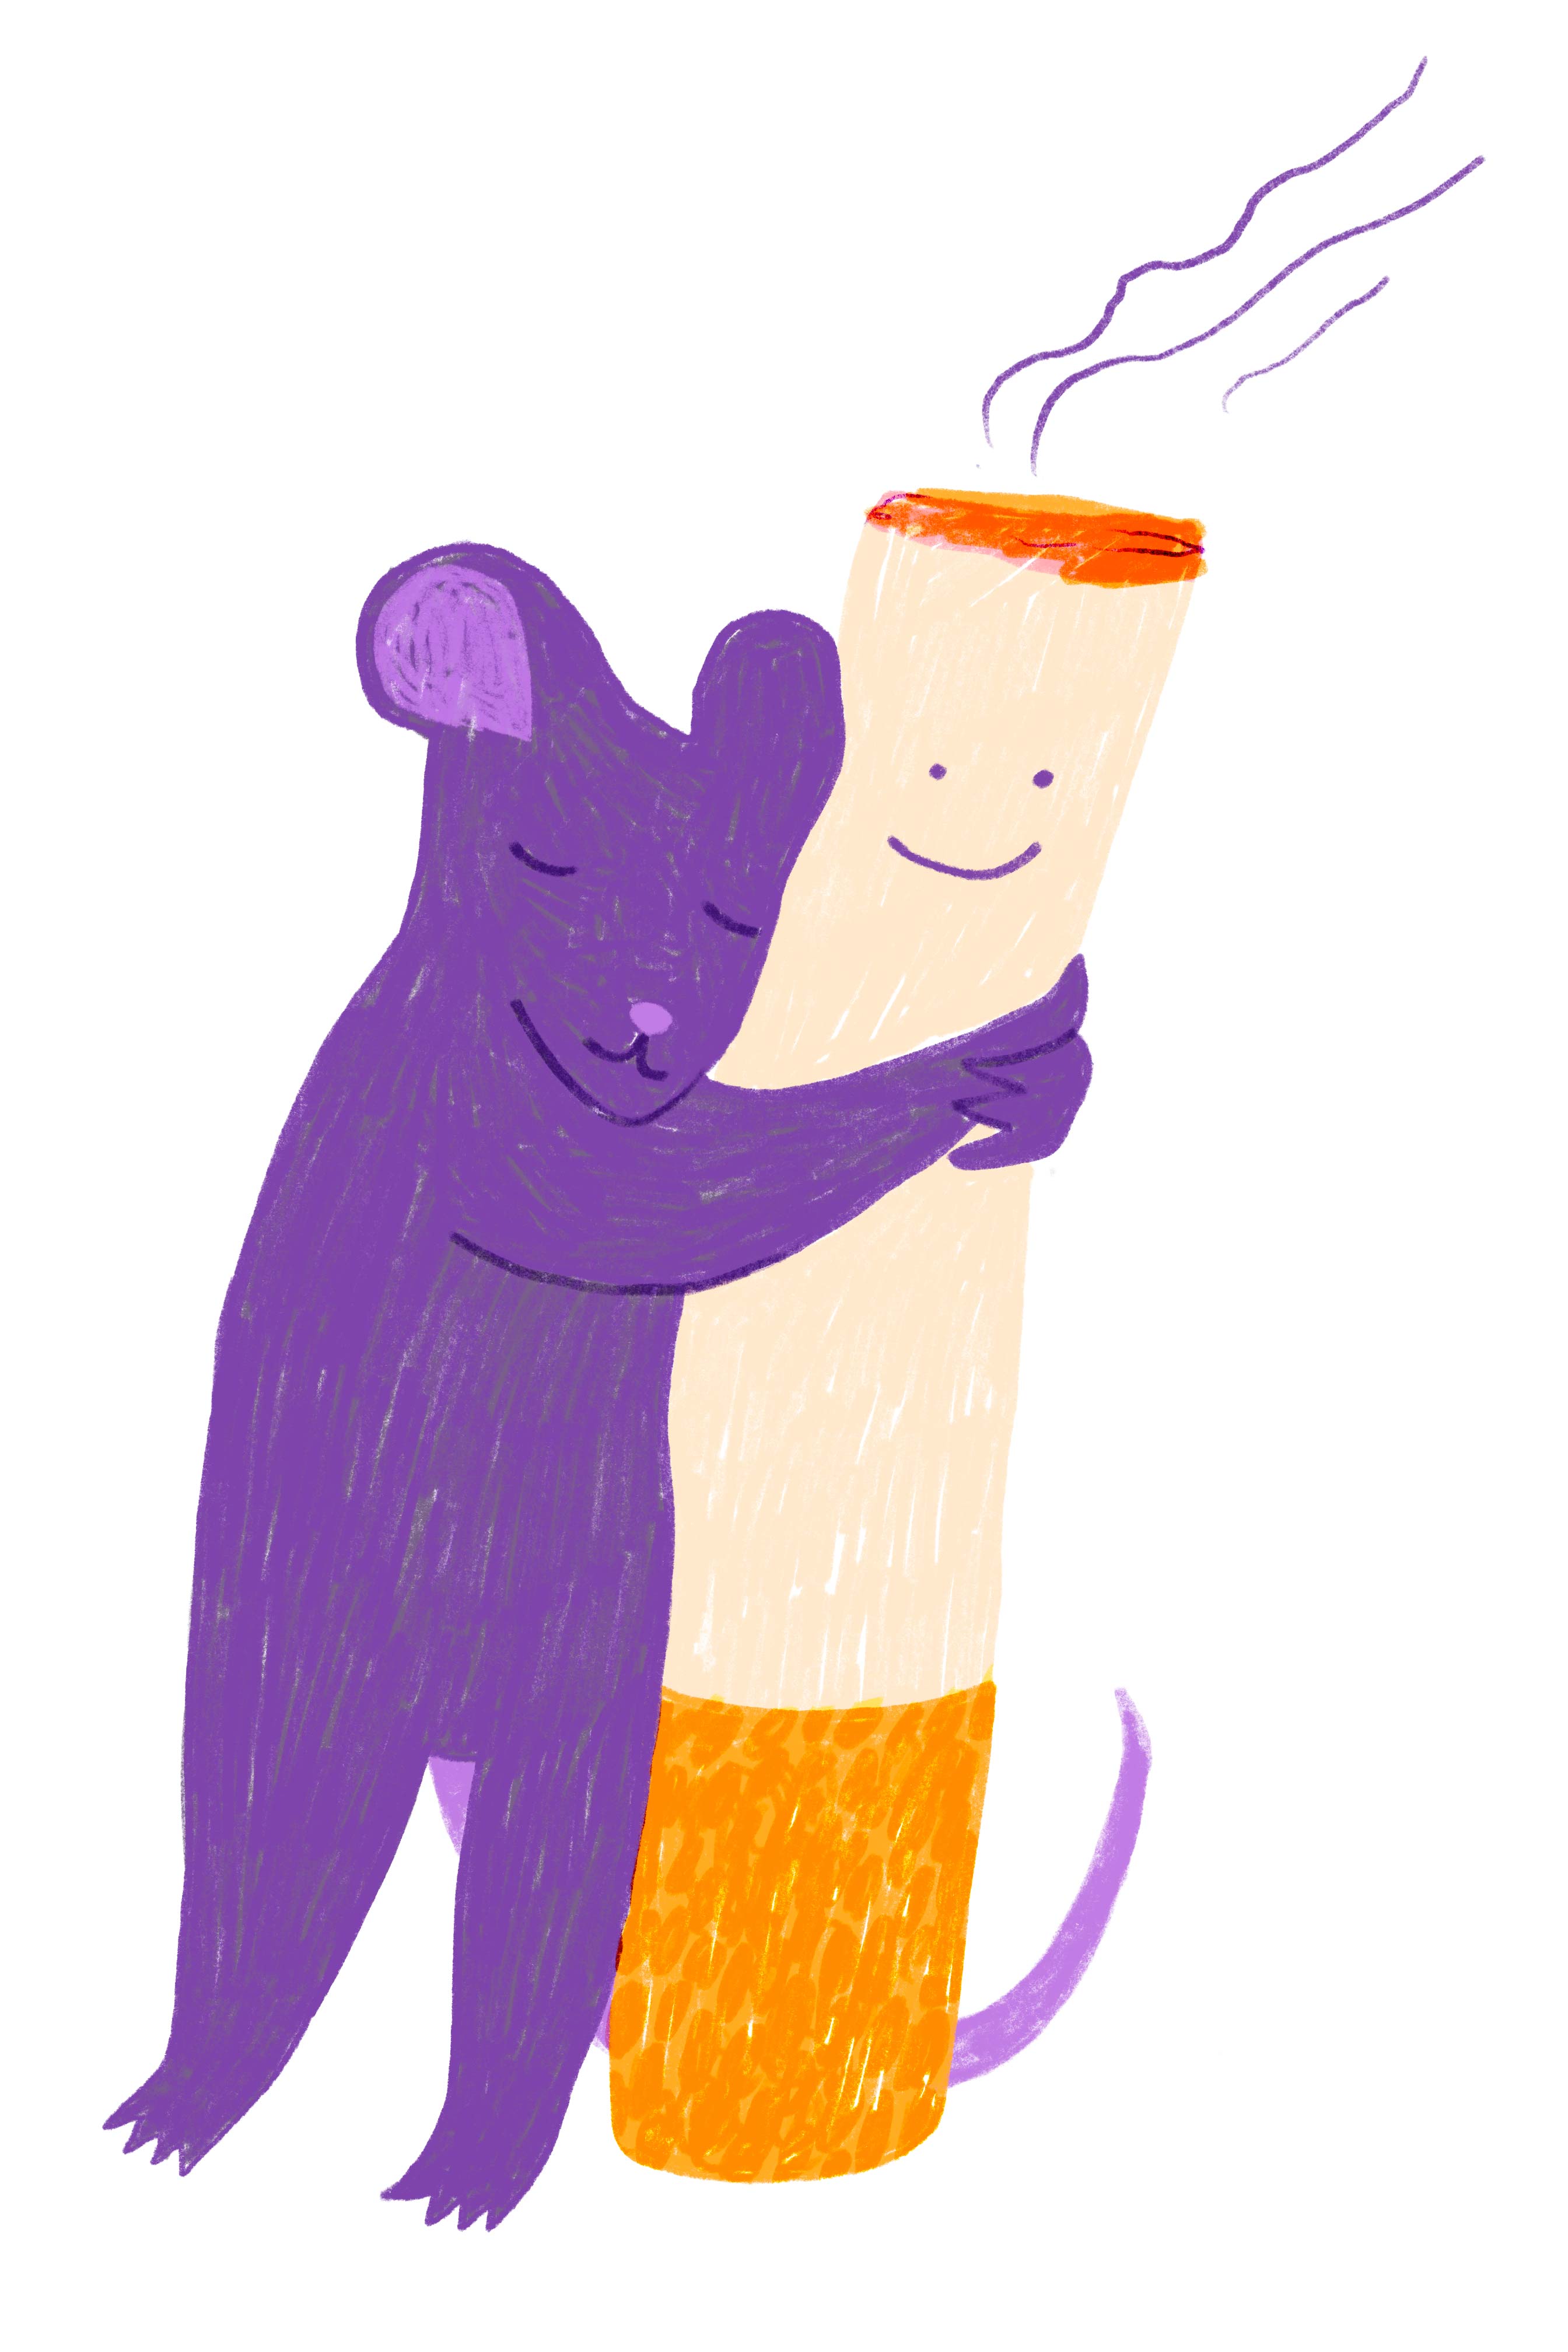 A purple rat hugs a cigarette.